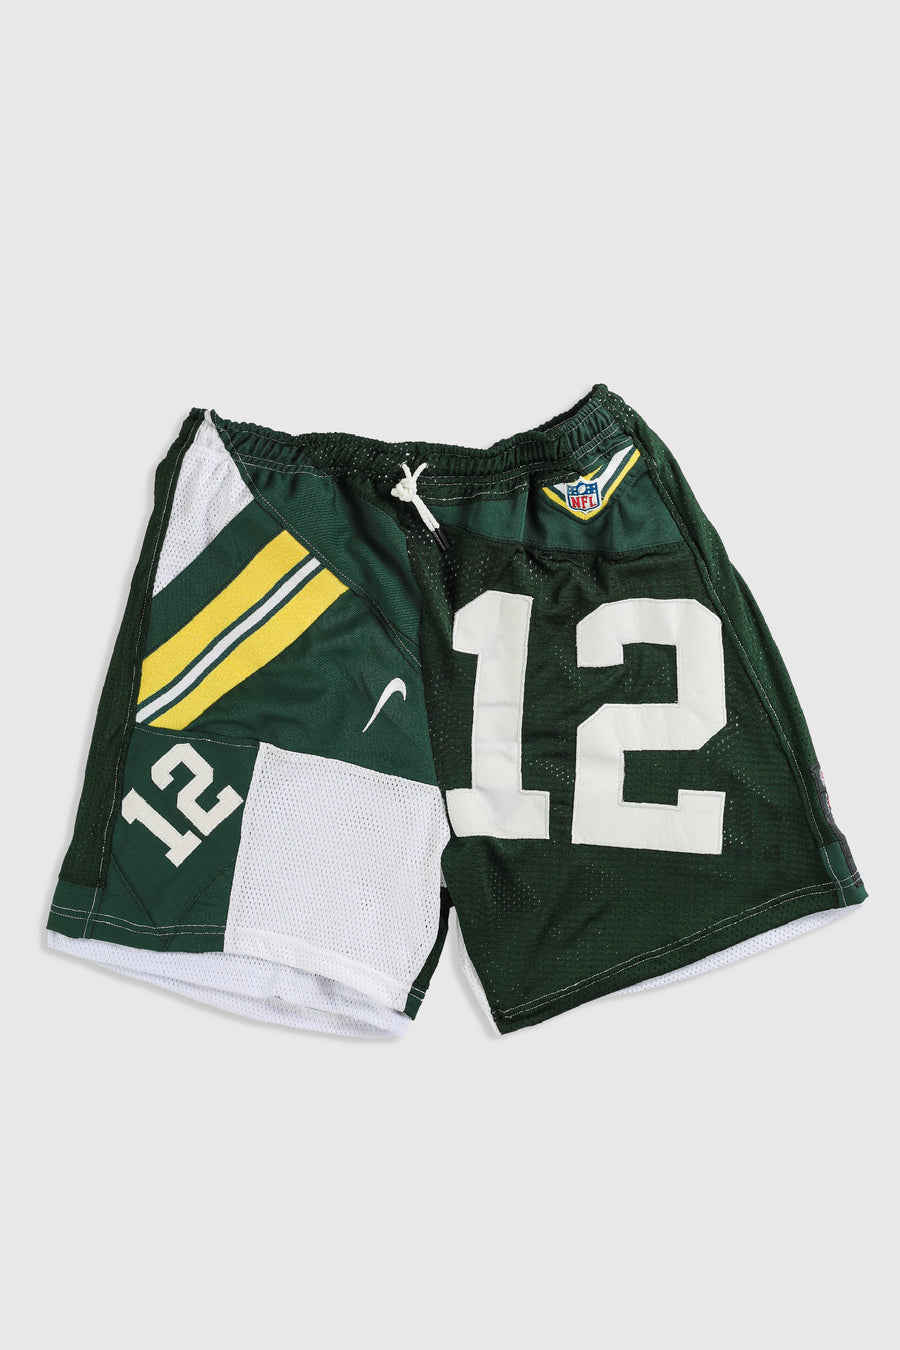 Unisex Rework Packers NFL Jersey Shorts - XL